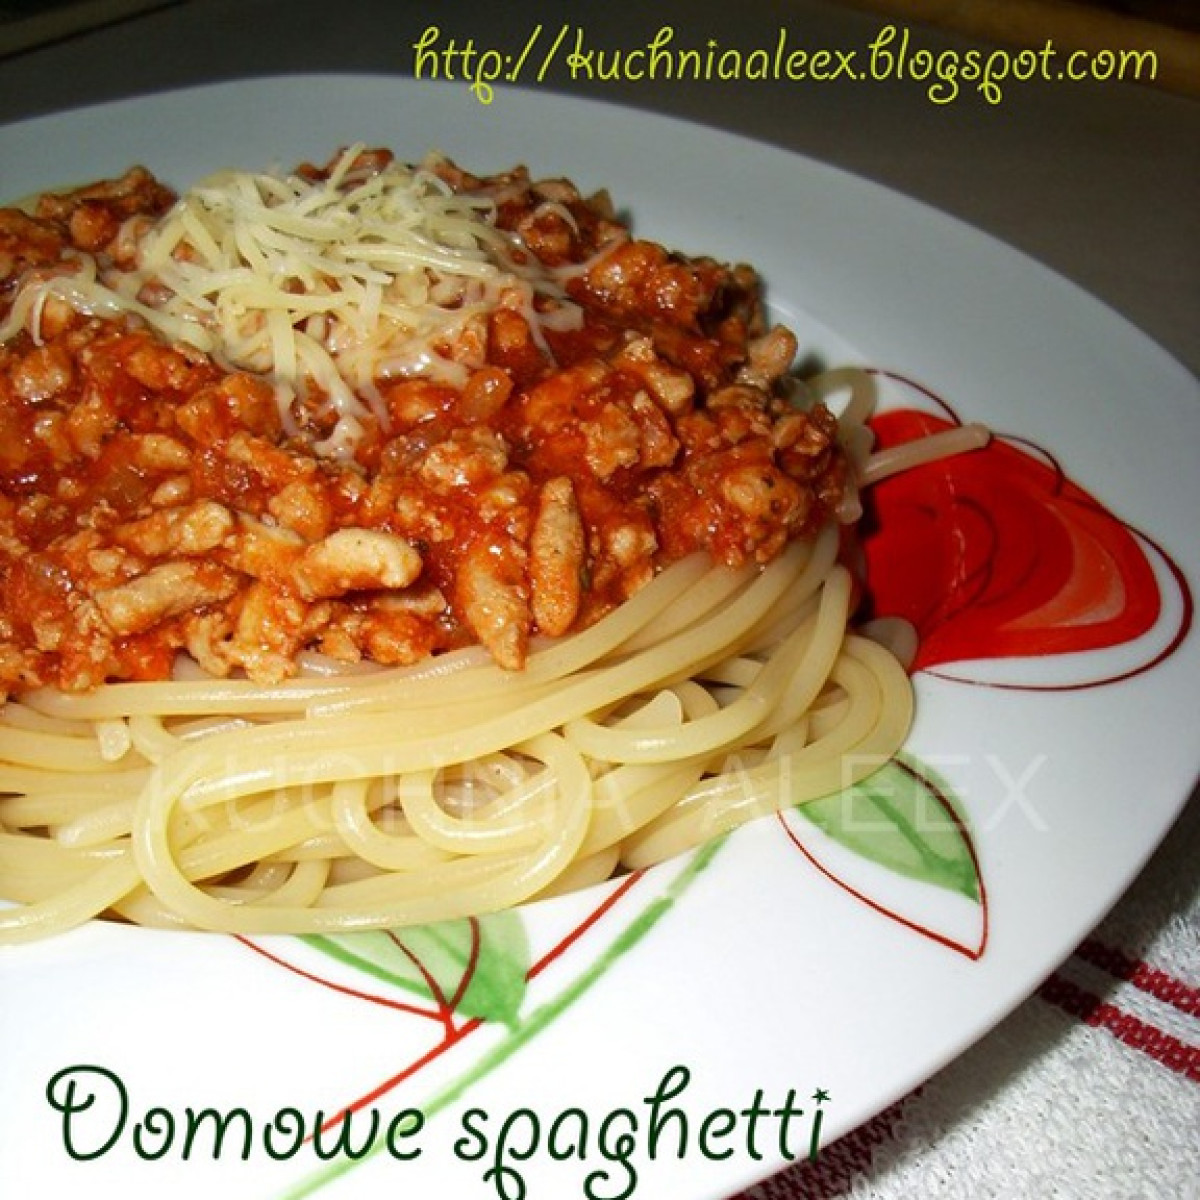 Domowe spaghetti bolognese wg Aleex